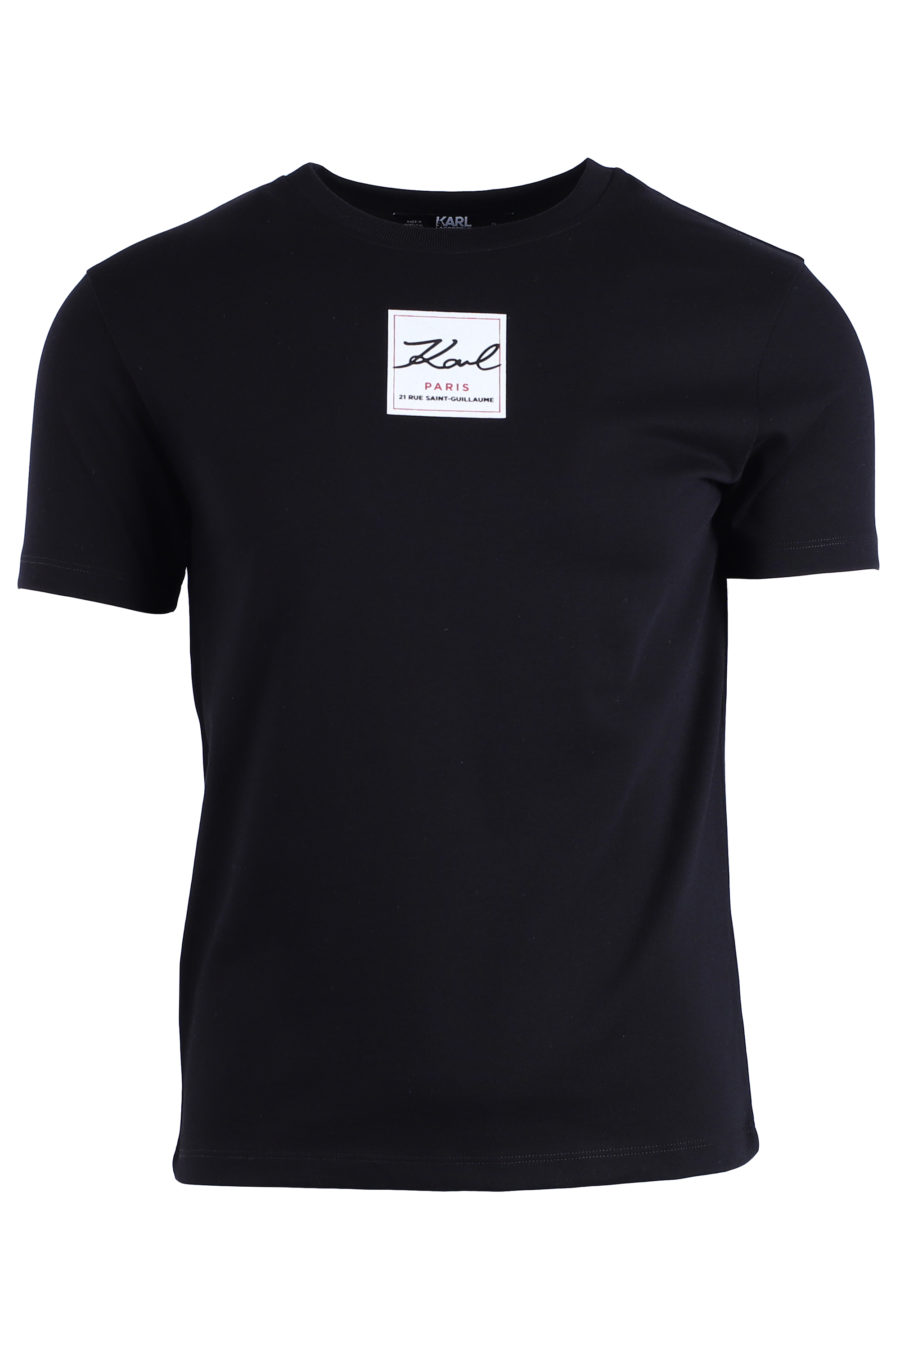 Camiseta unisex negra con logo - IMG 9058